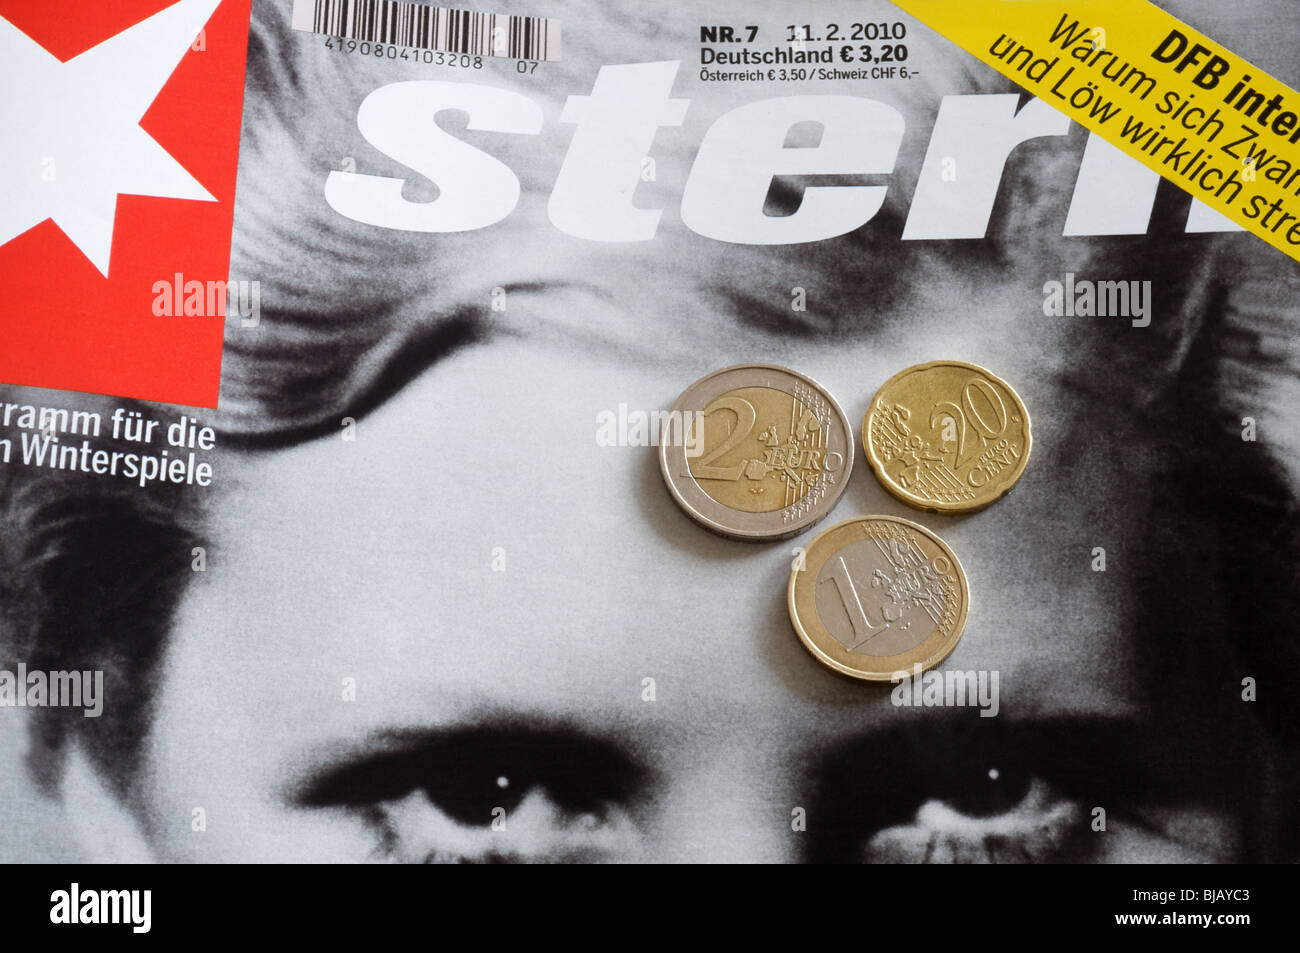 Stern, German weekly news magazine Stock Photo